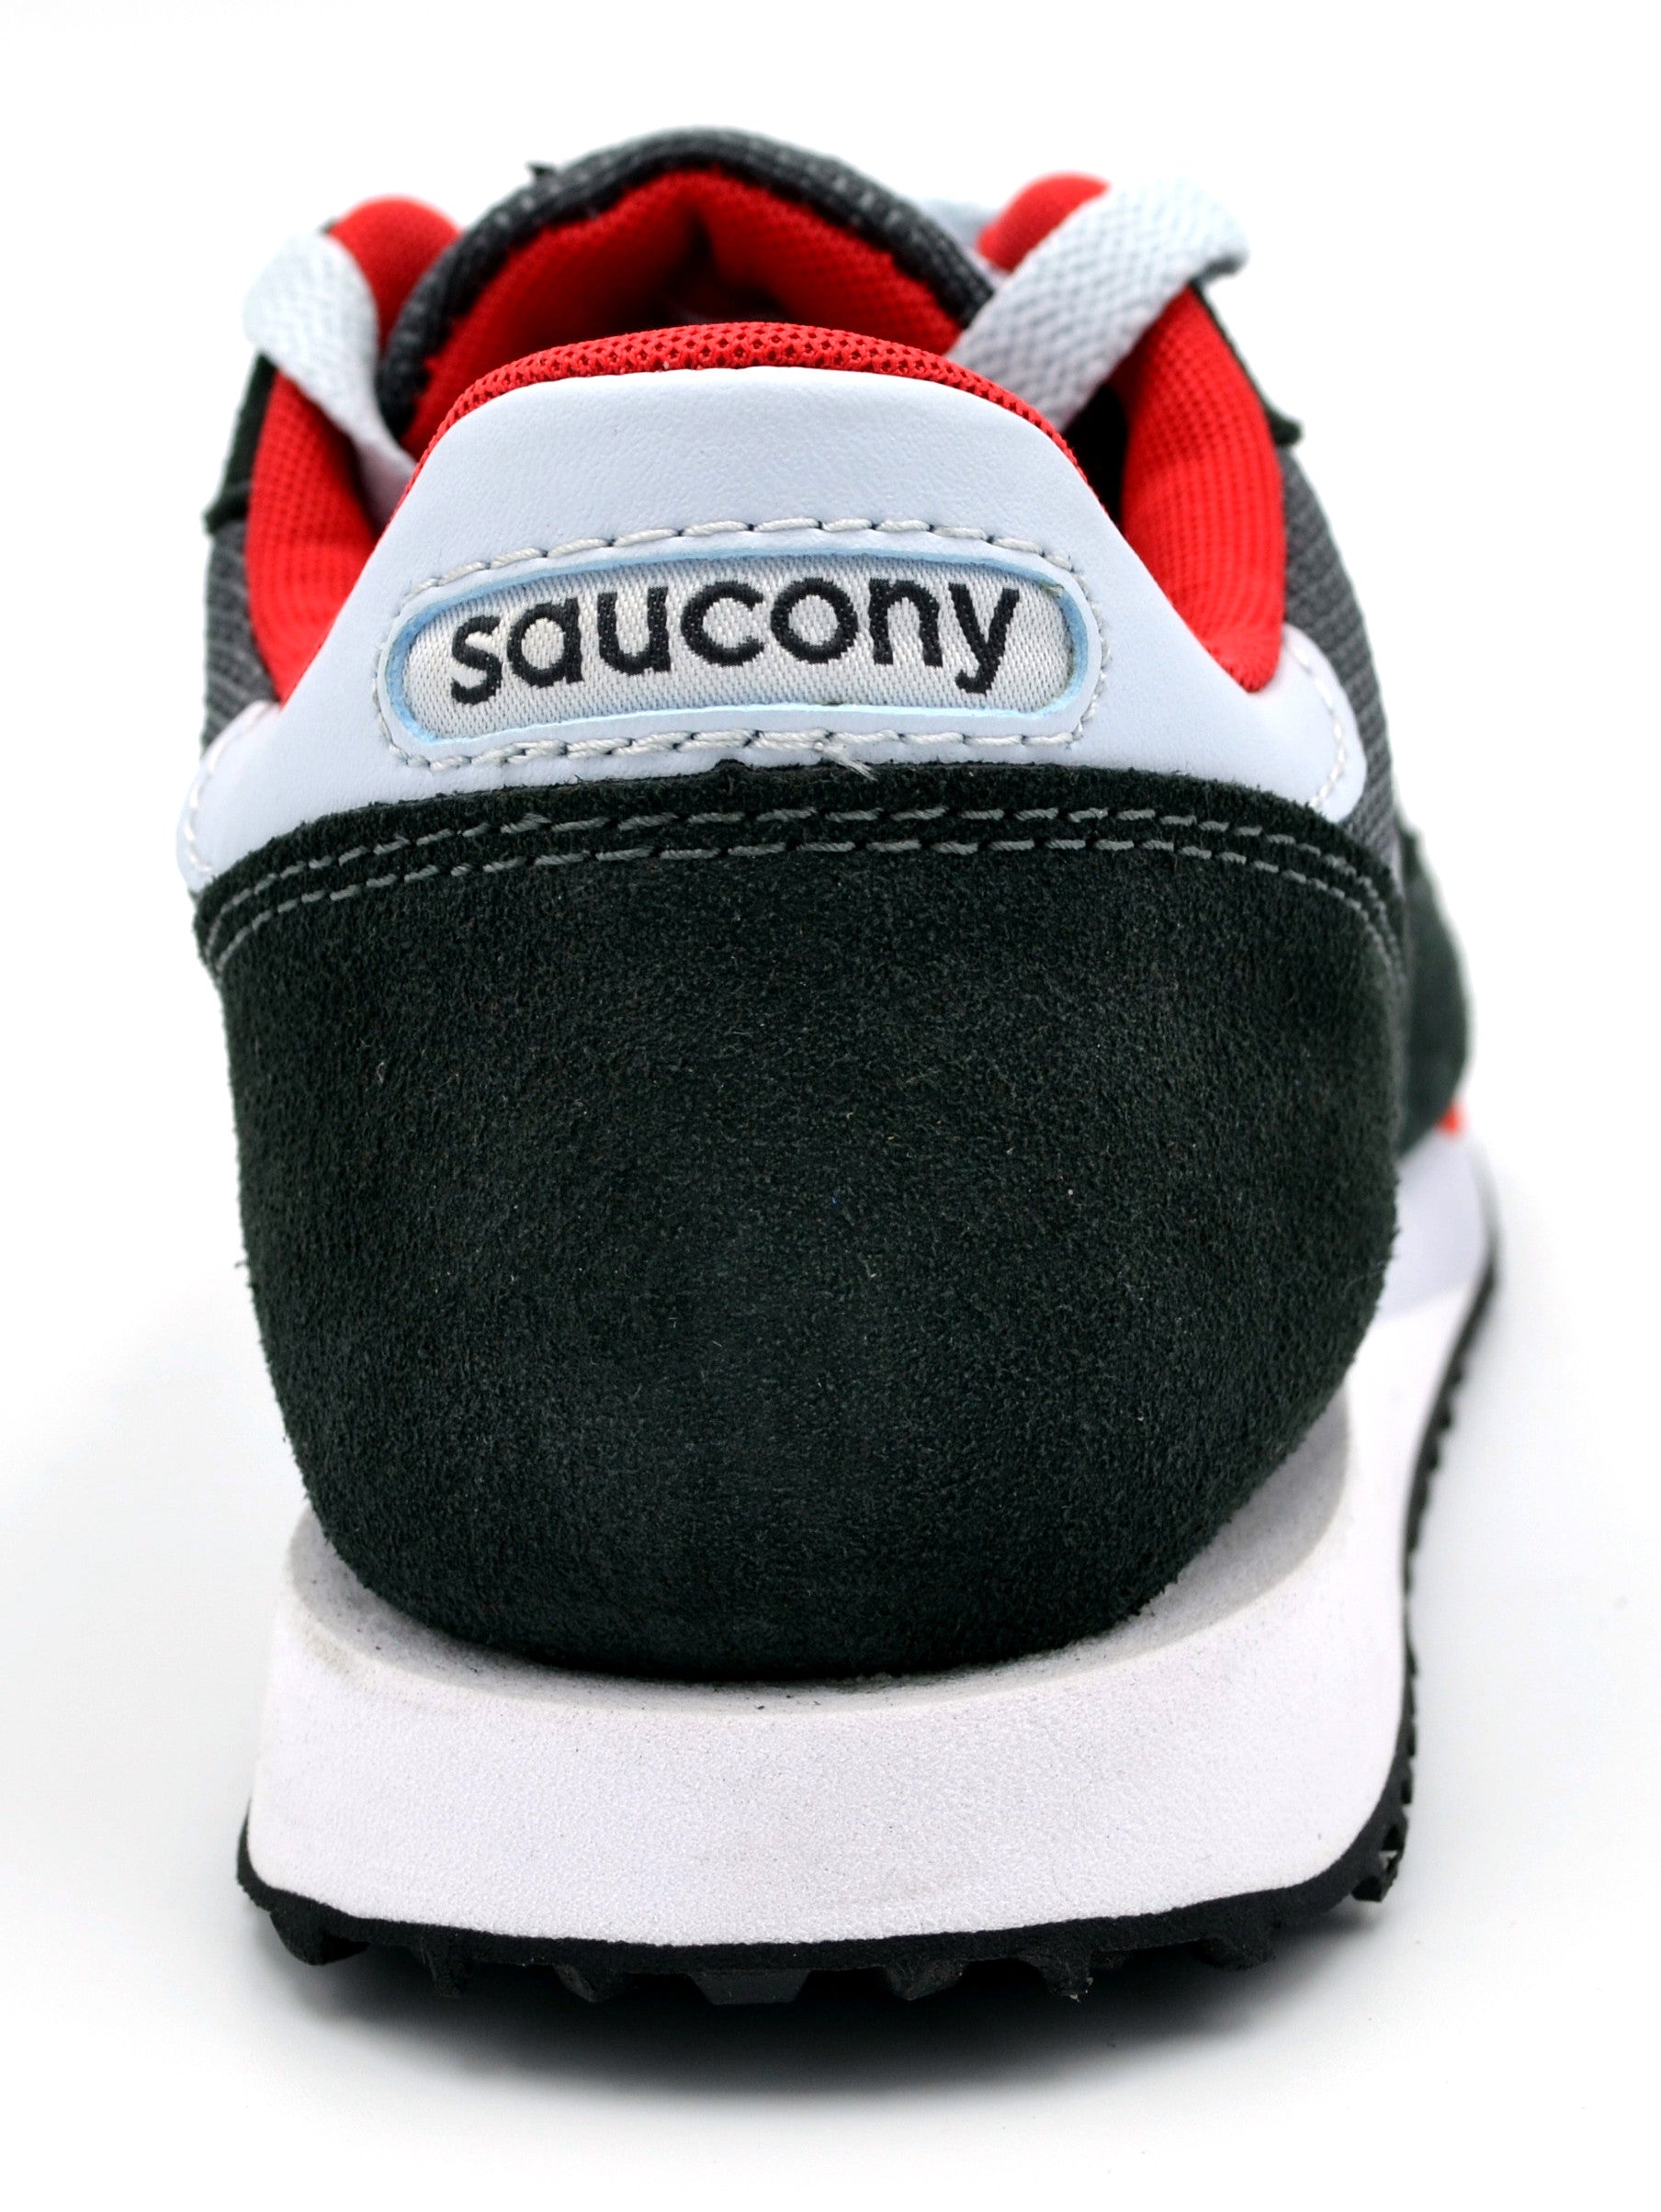 Saucony sneaker dxn trainer